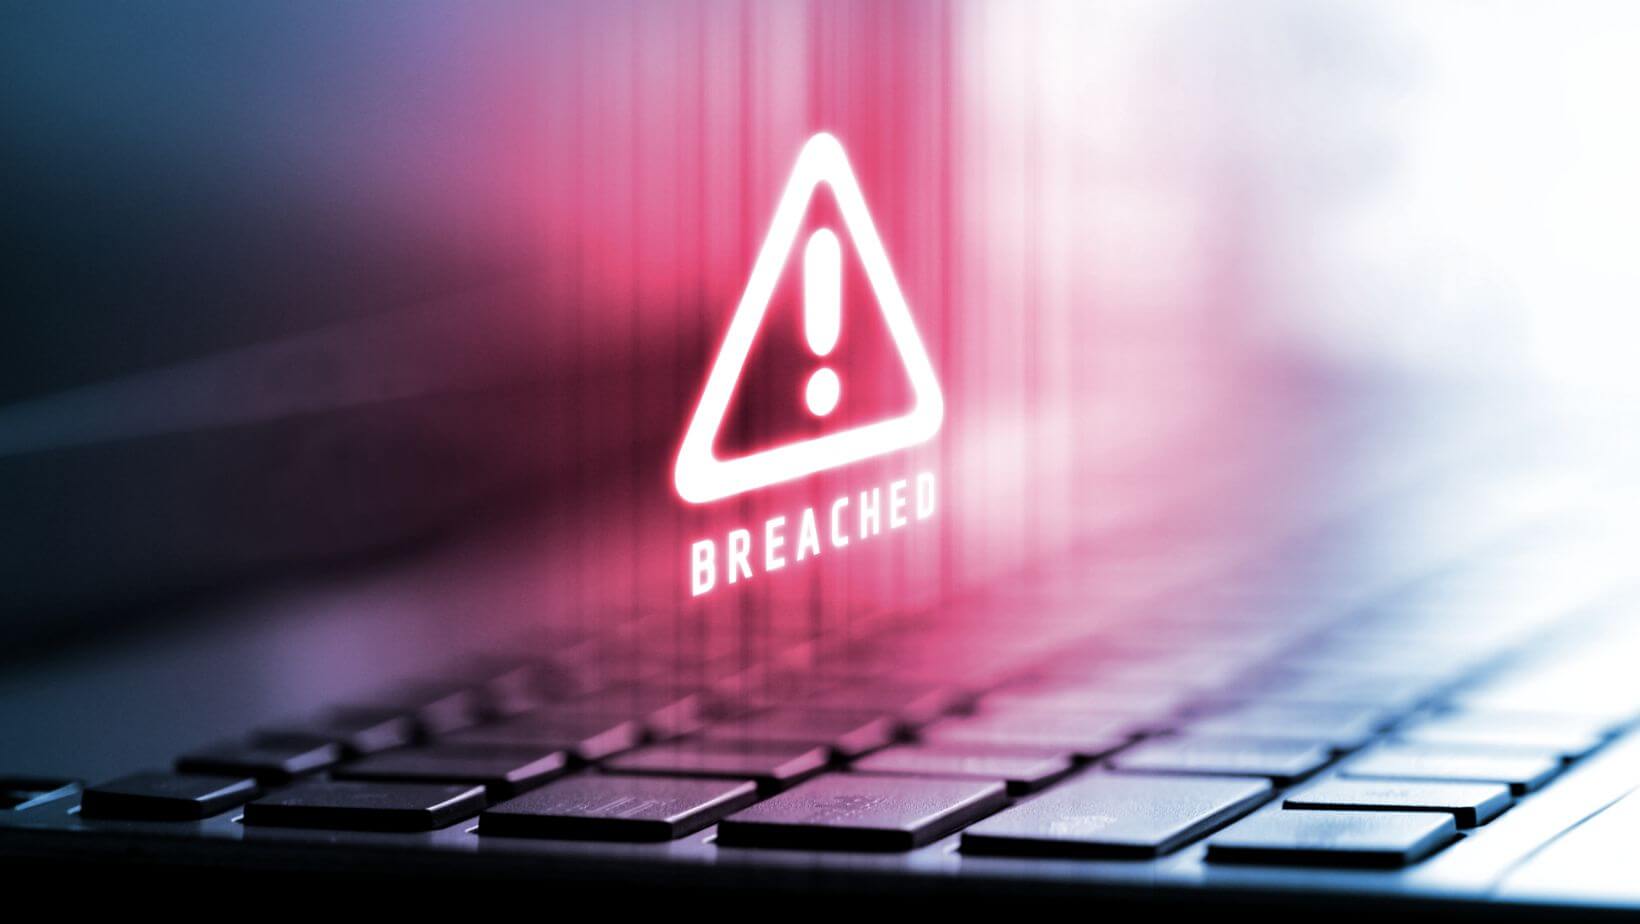 Data breach on a laptop